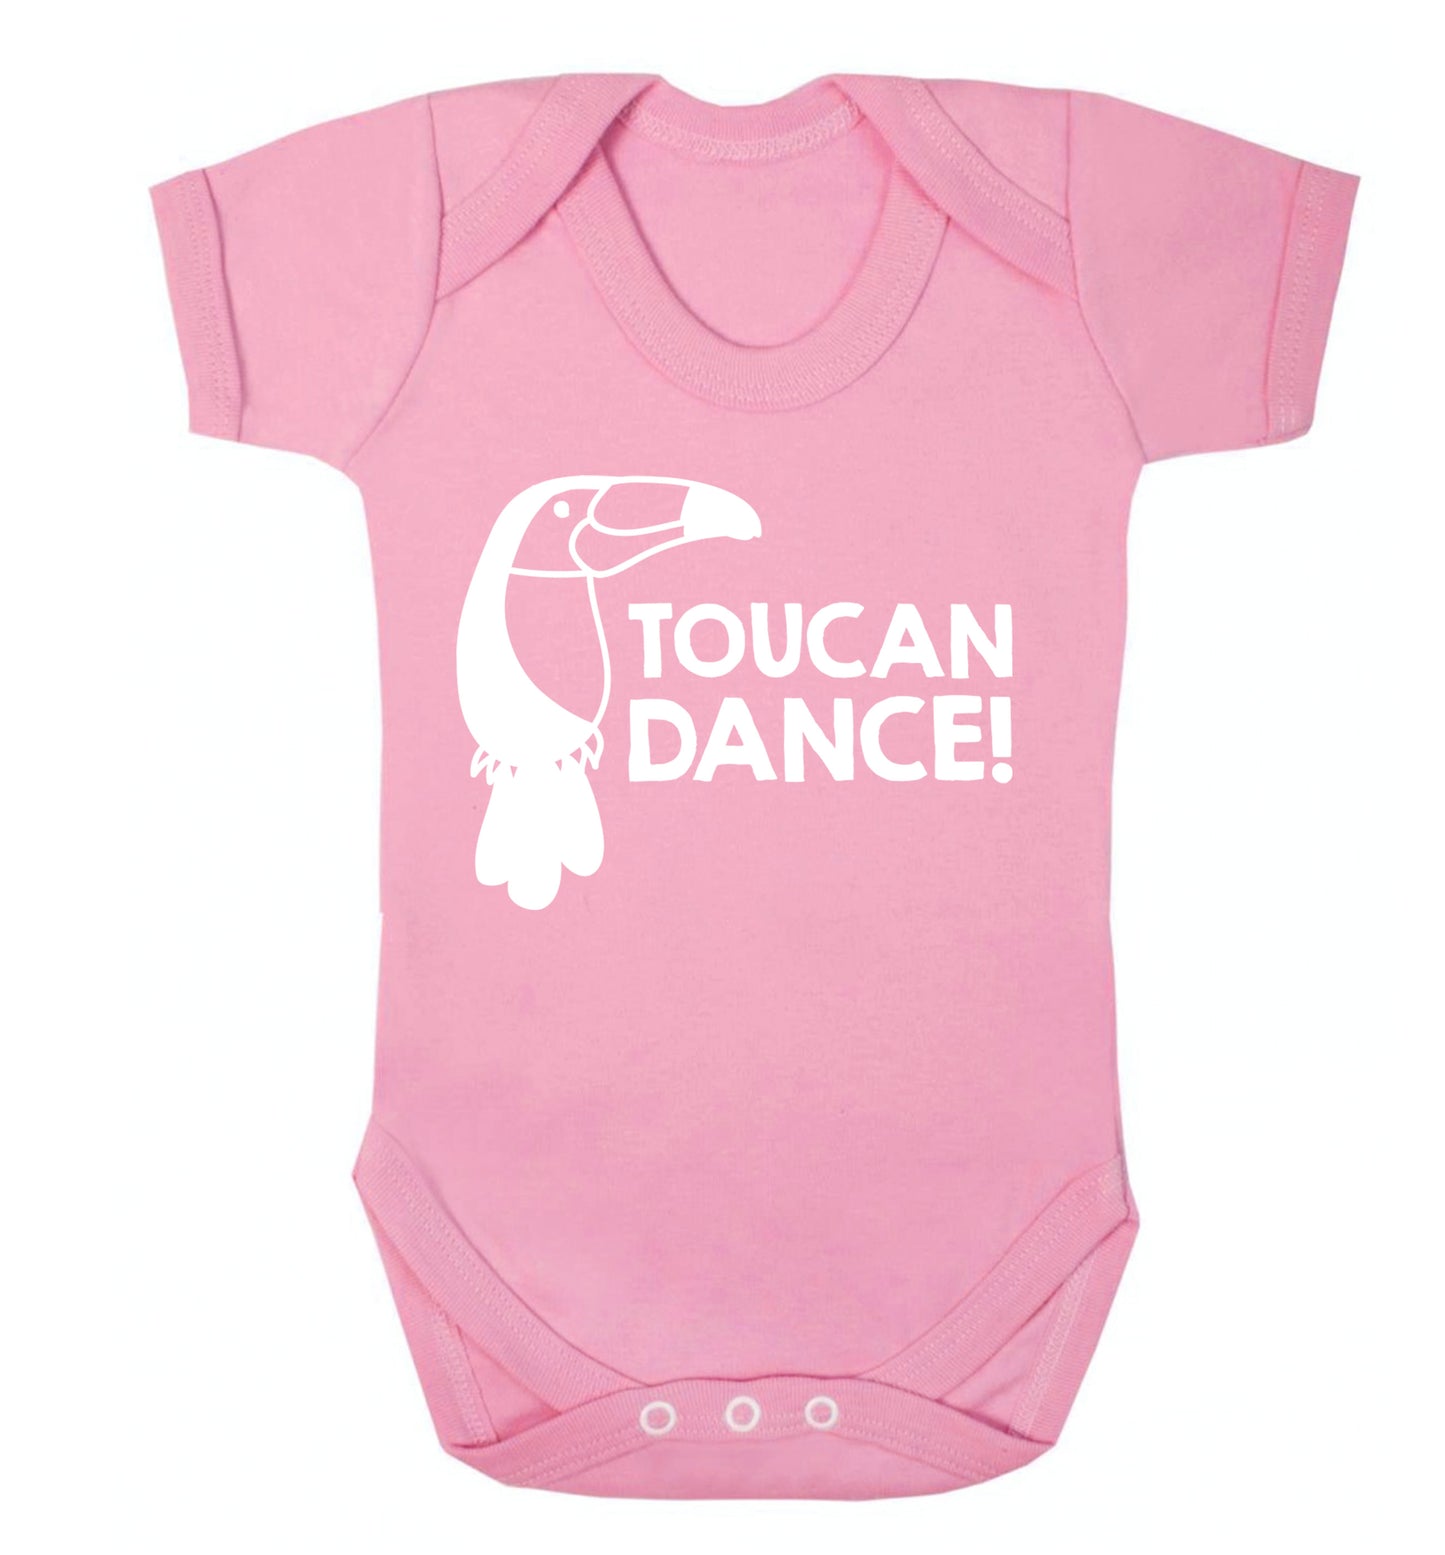 Toucan dance Baby Vest pale pink 18-24 months